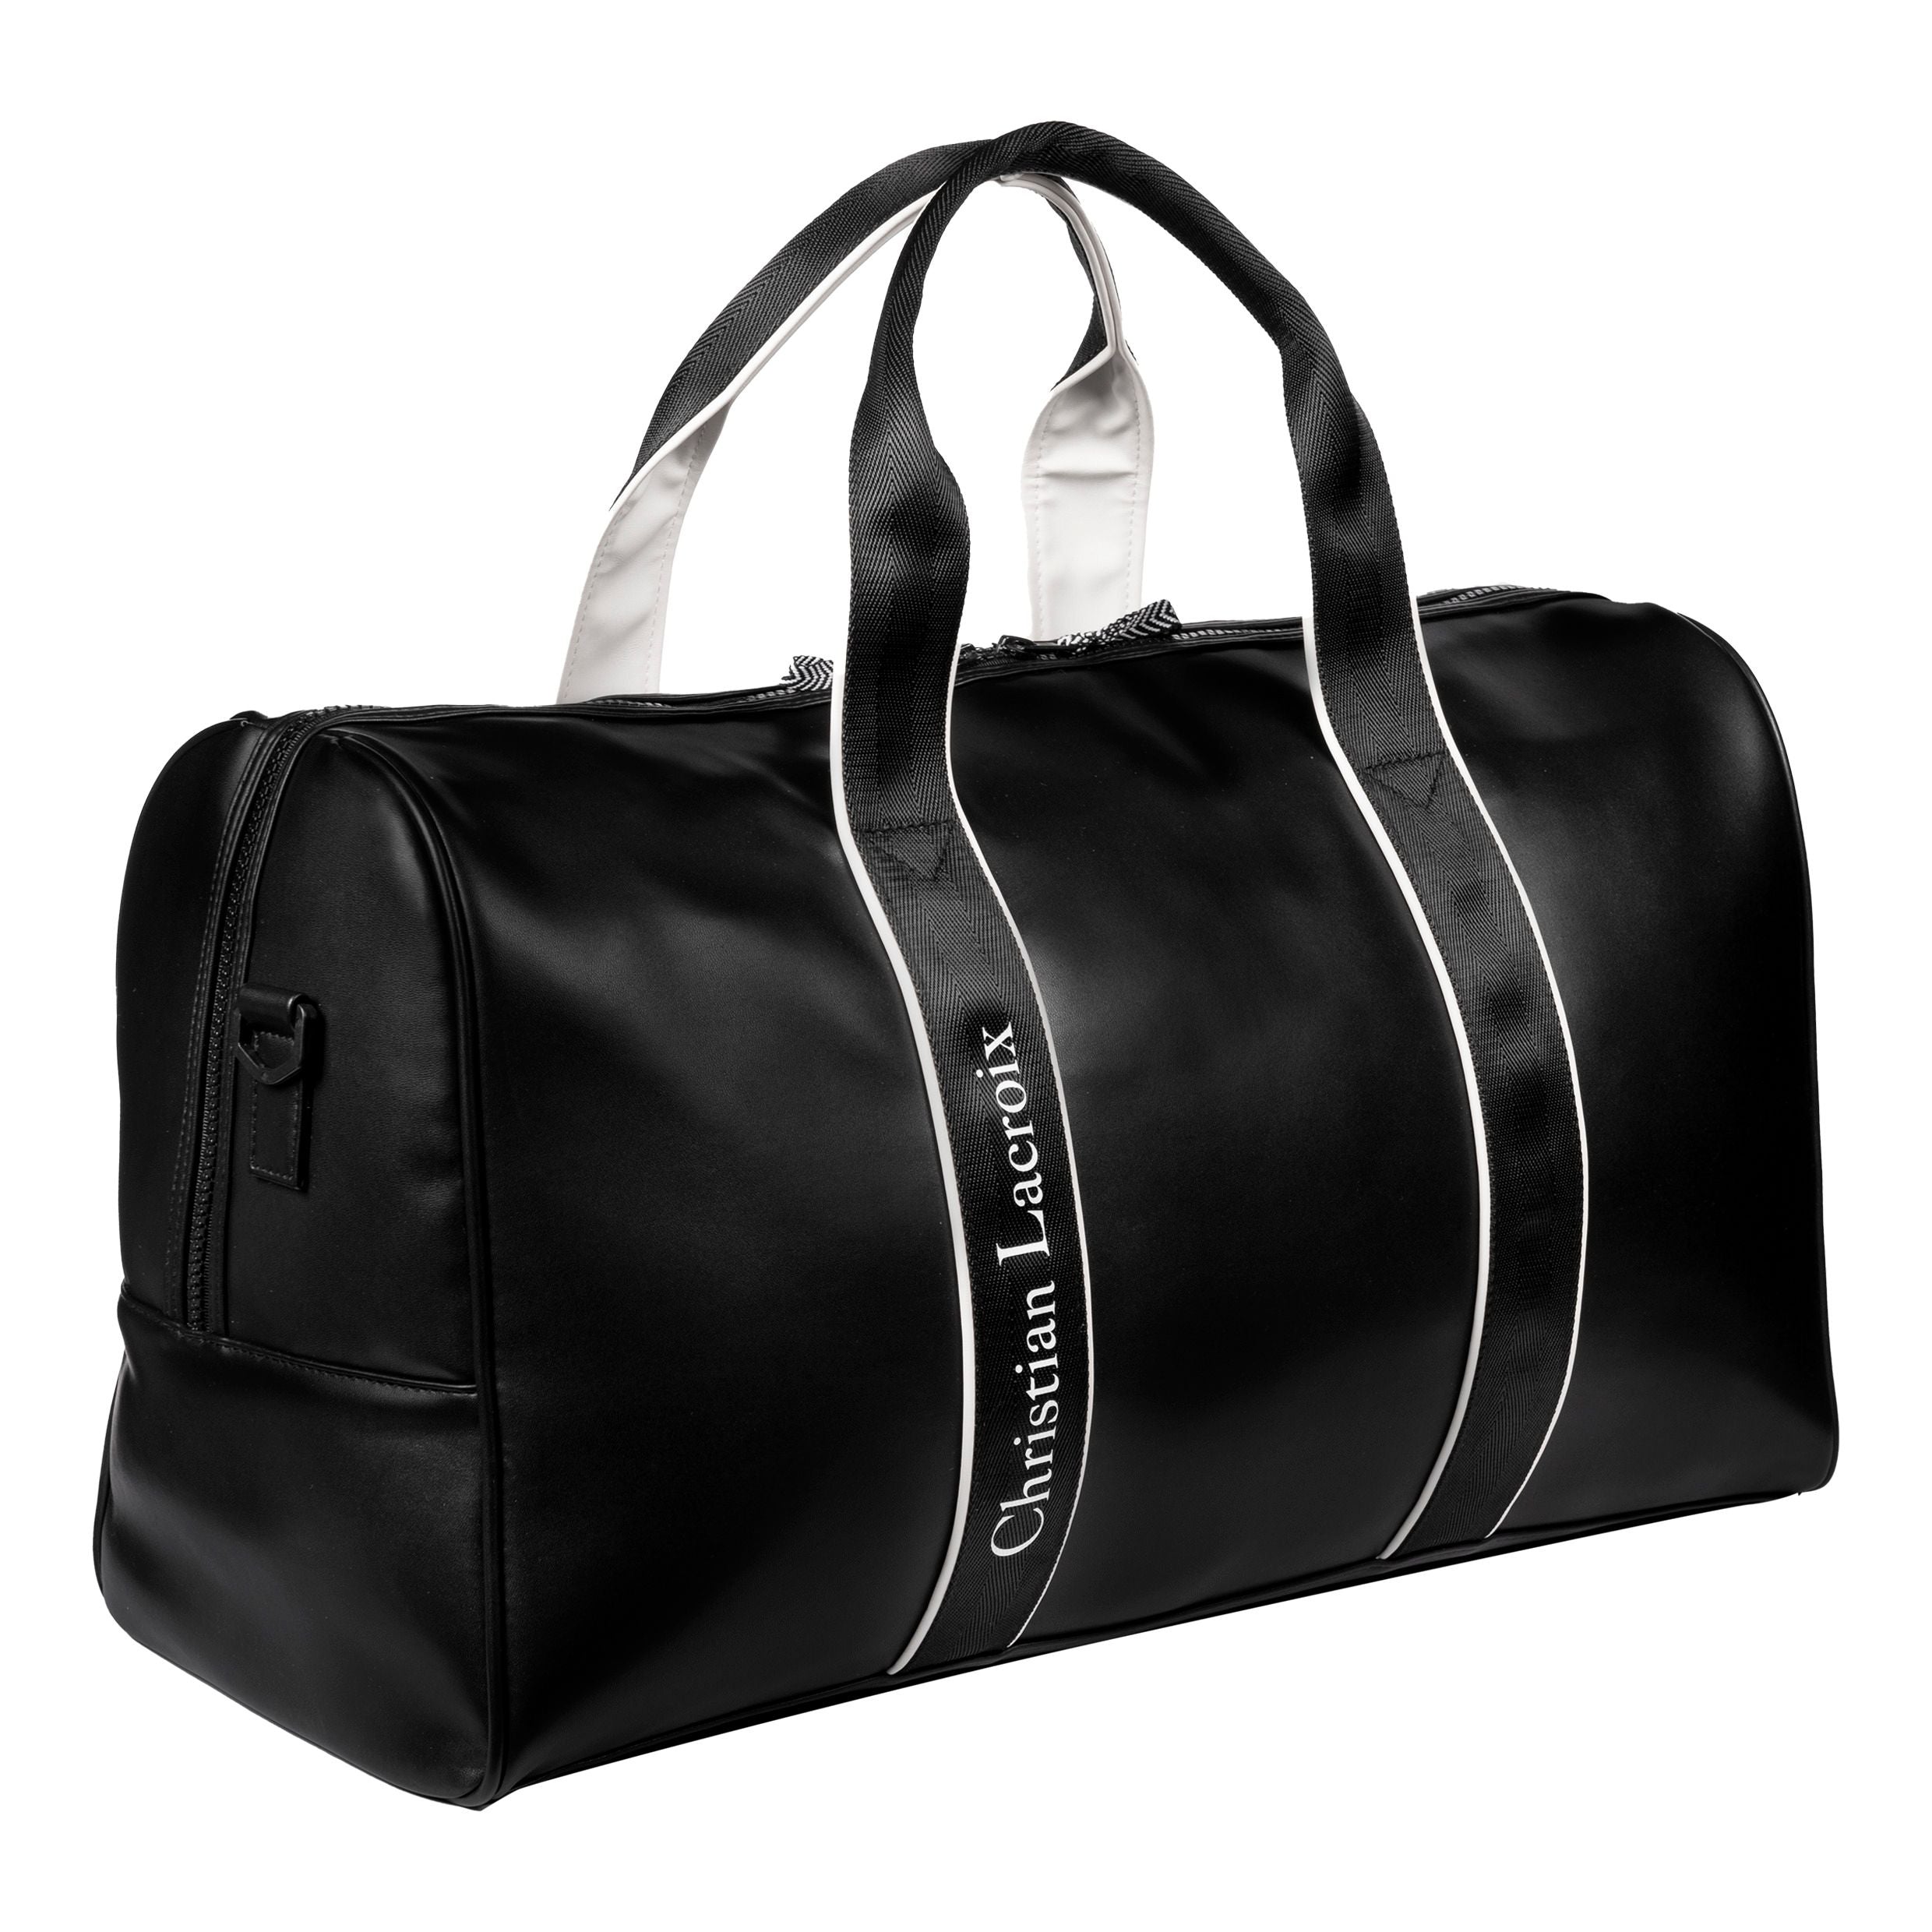 Christian Lacroix | Travel bag | Altius | Black | Corporate gifts ...